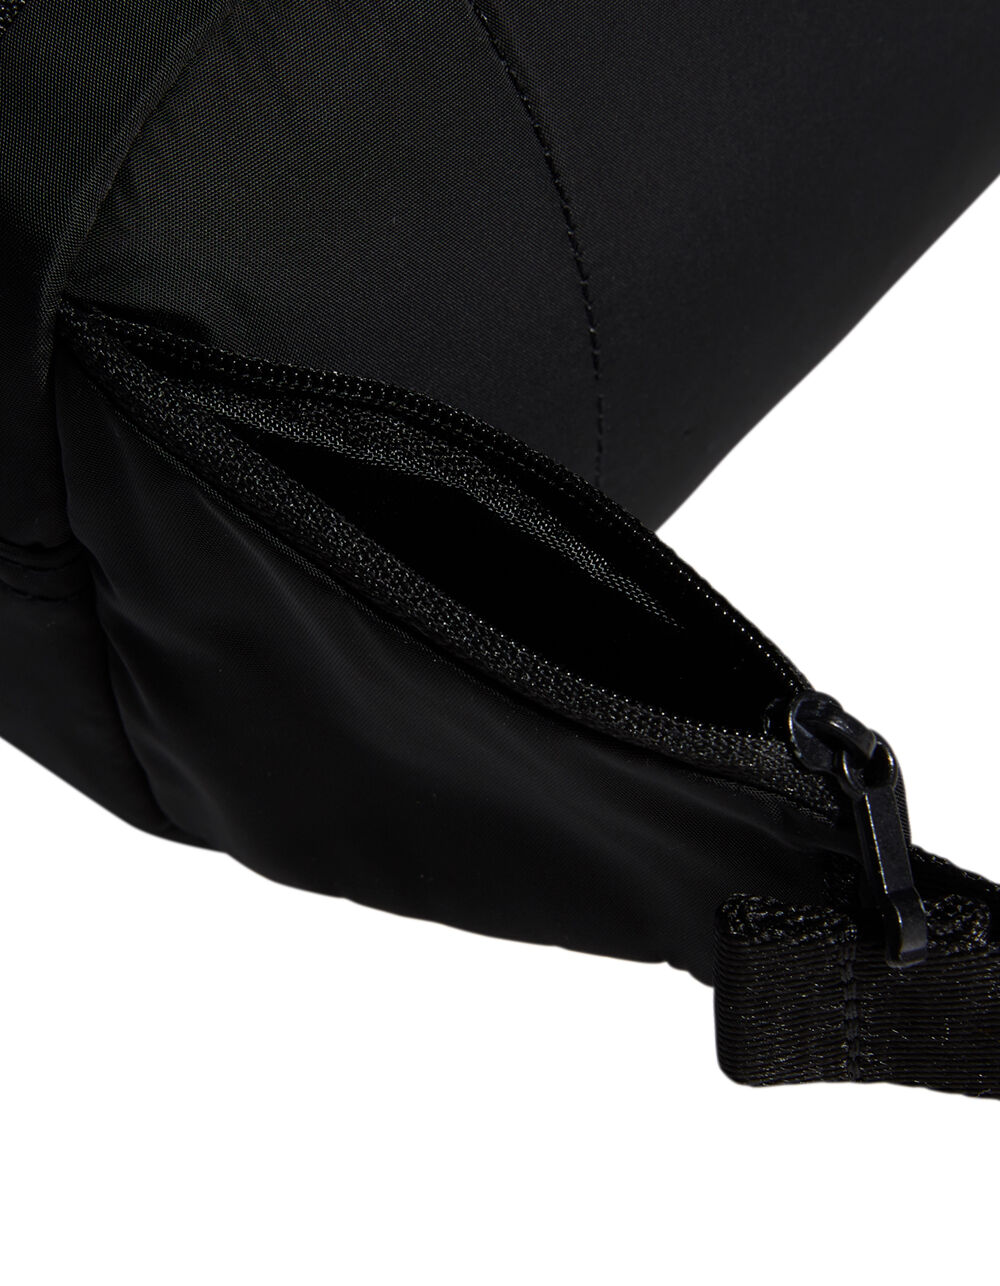 adidas Originals Sport Fanny Pack in Black for Men